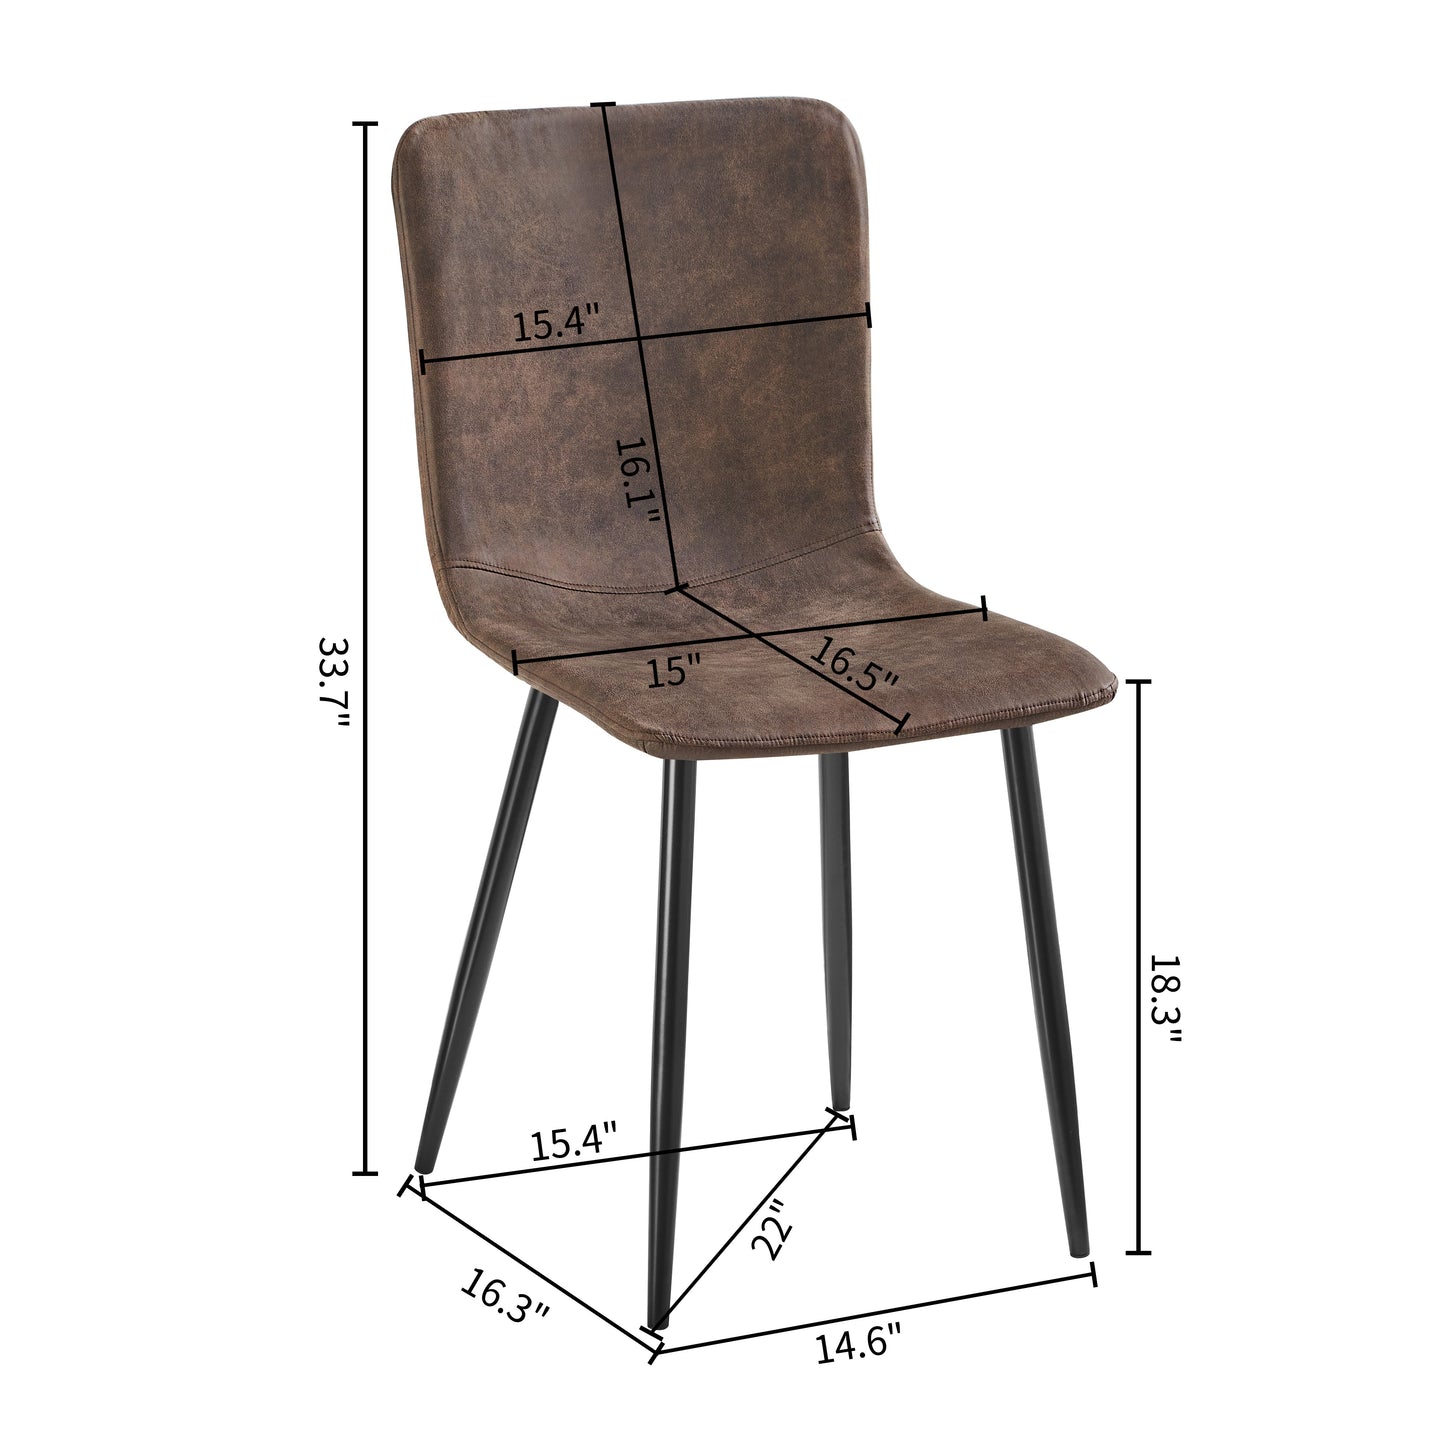 SCARGILL Dining Chair with Metal Legs - Black/Brown